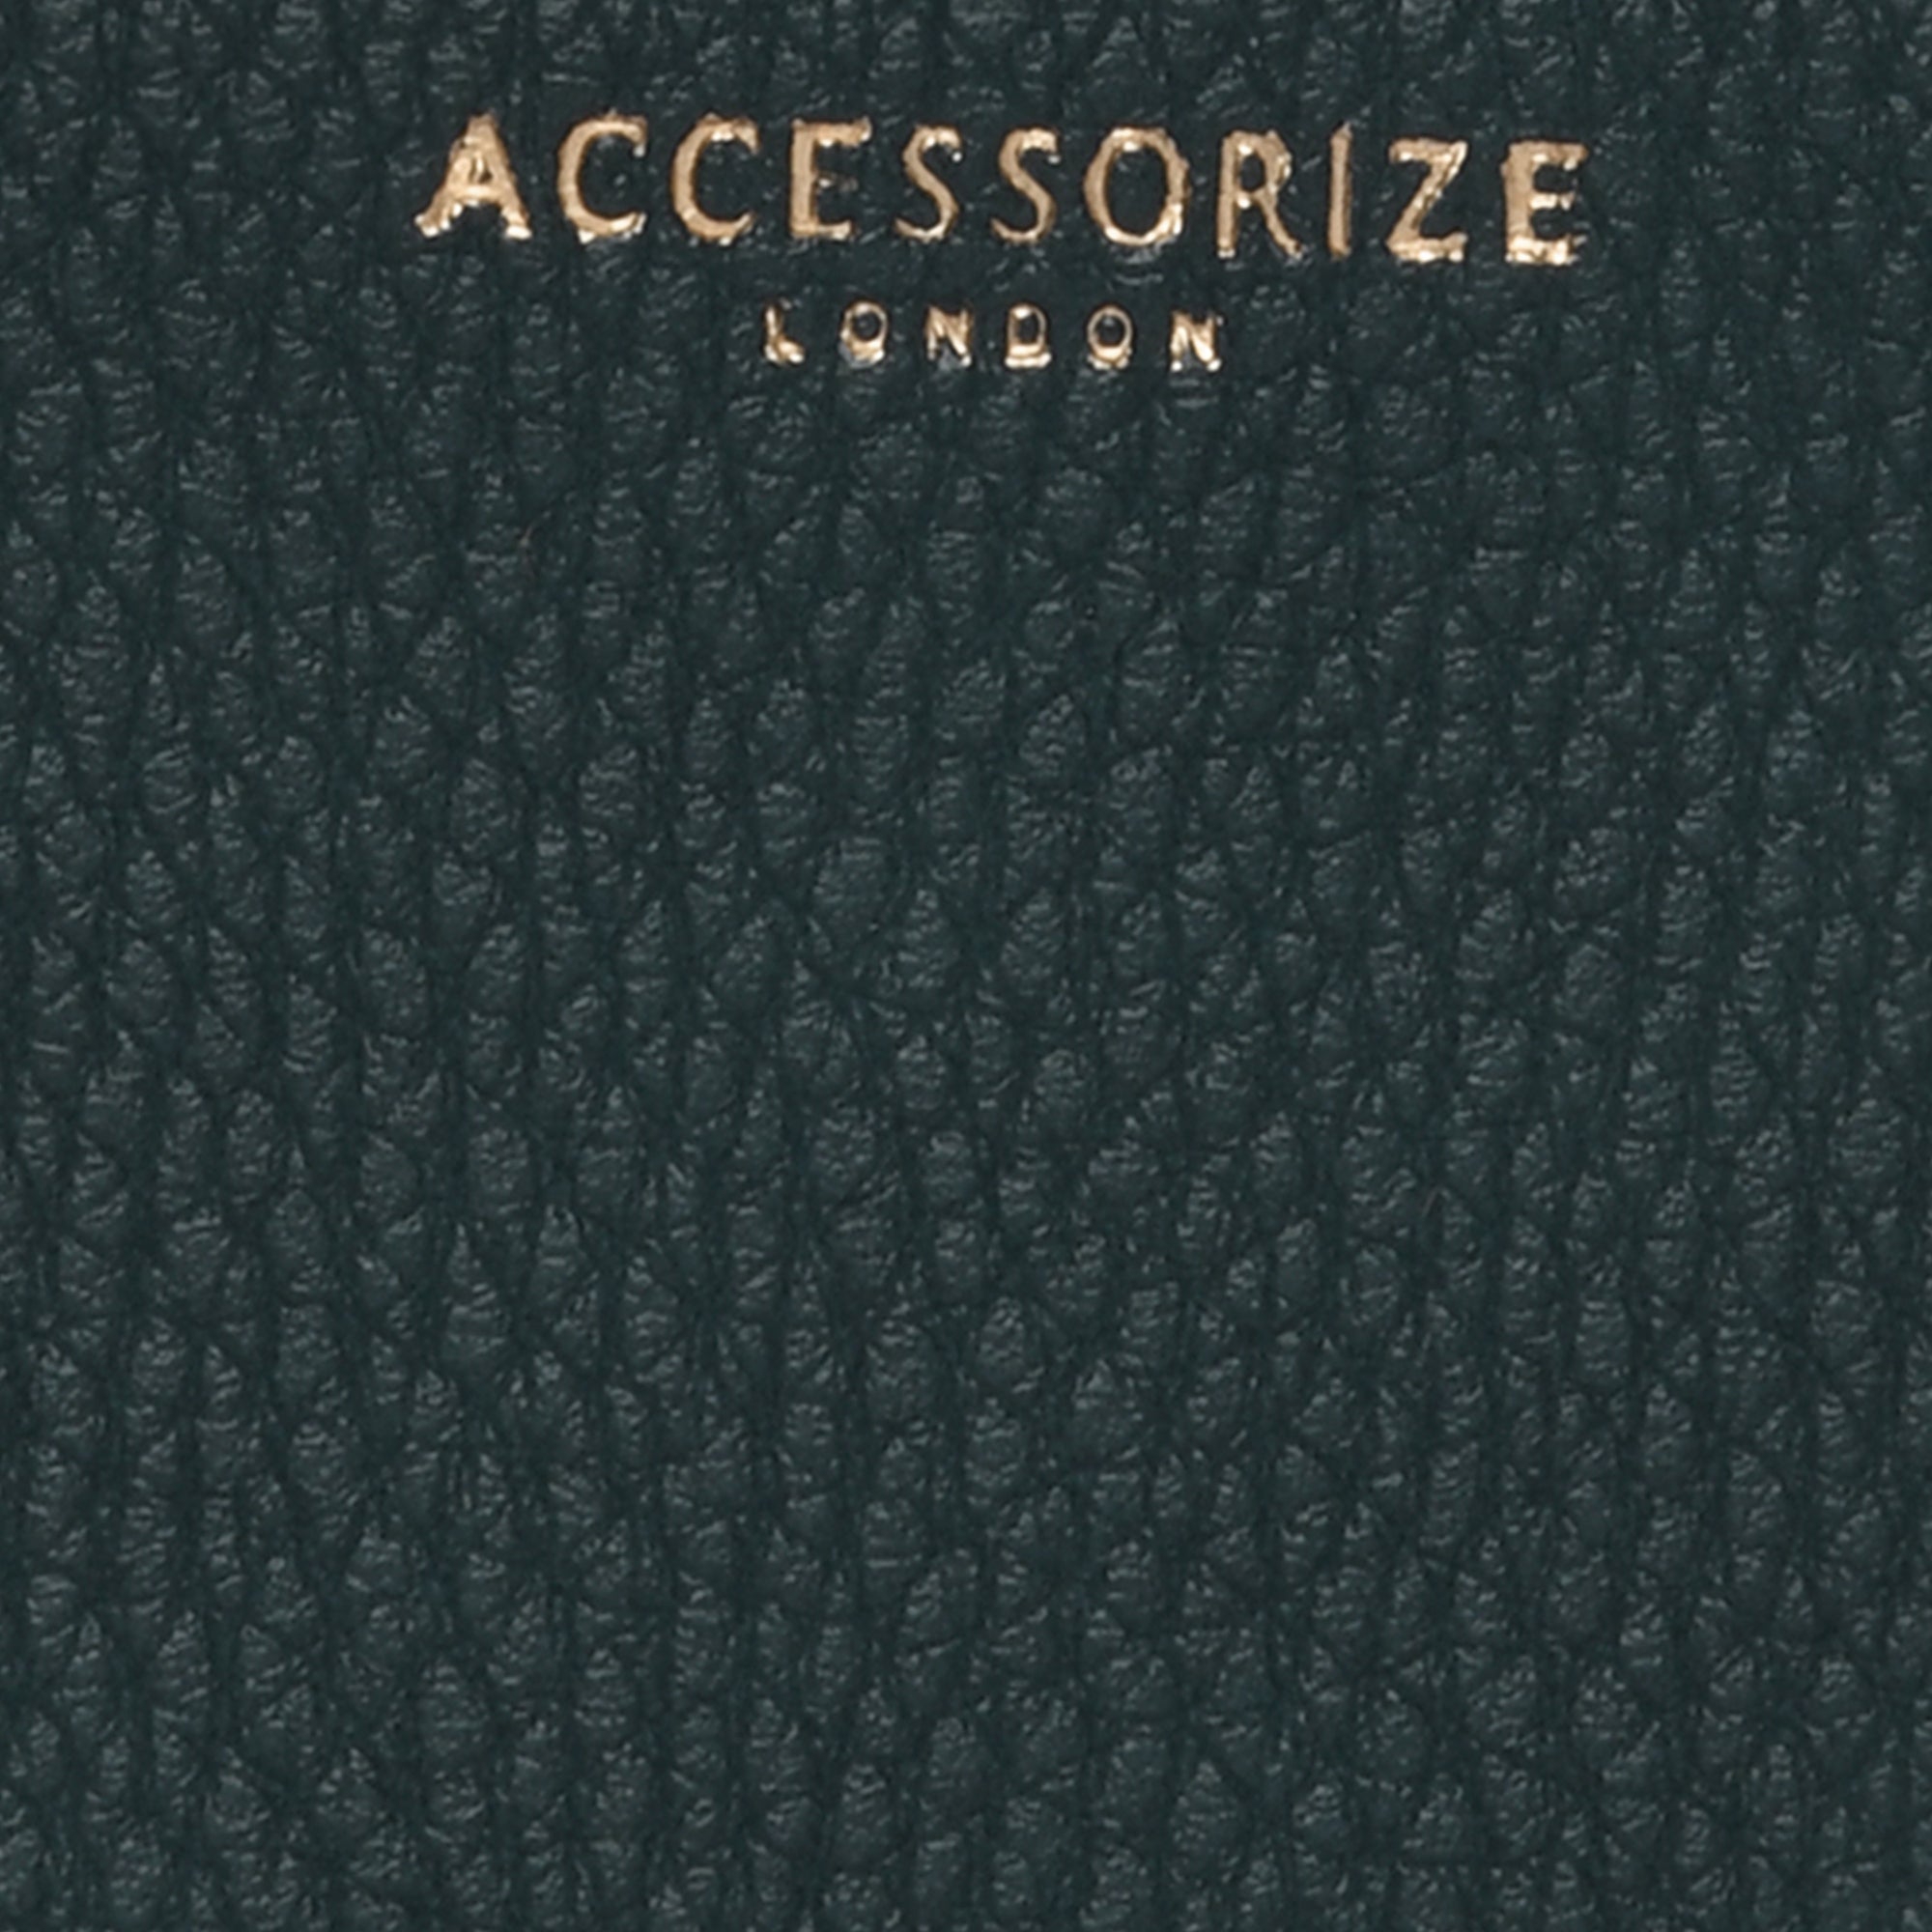 Accessorize London Women's Faux Leather Teal Plain Card Holder